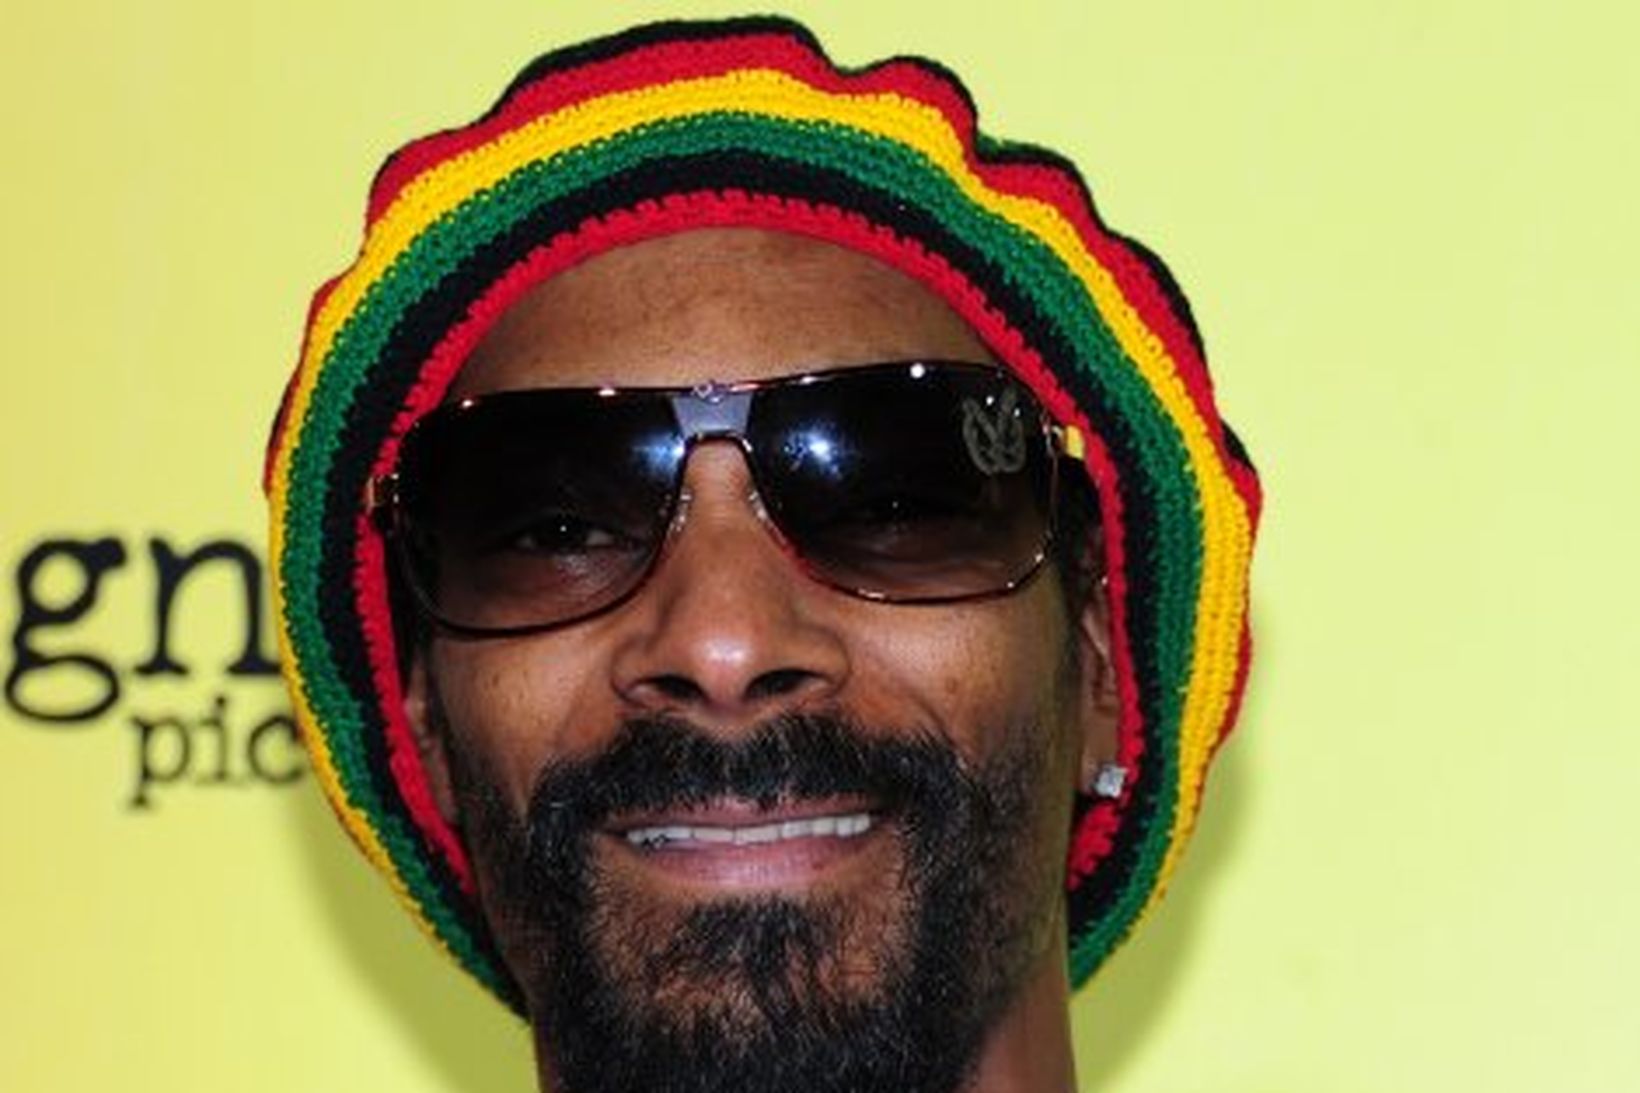 Raparinn Snoop Dogg.